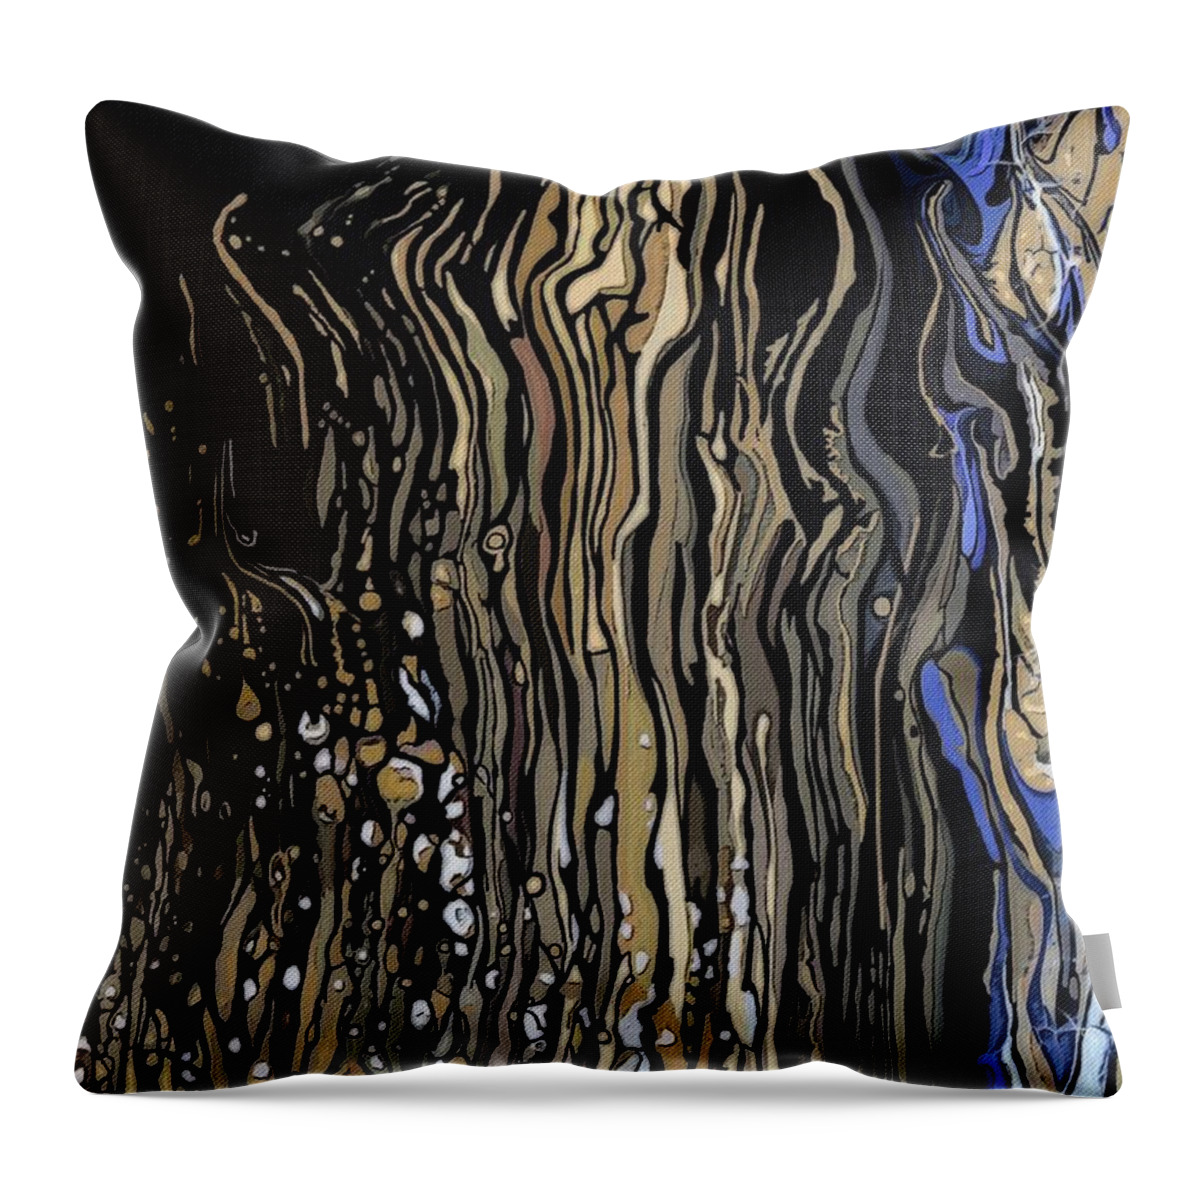 Black Throw Pillow featuring the digital art Seascape by Diana Rajala